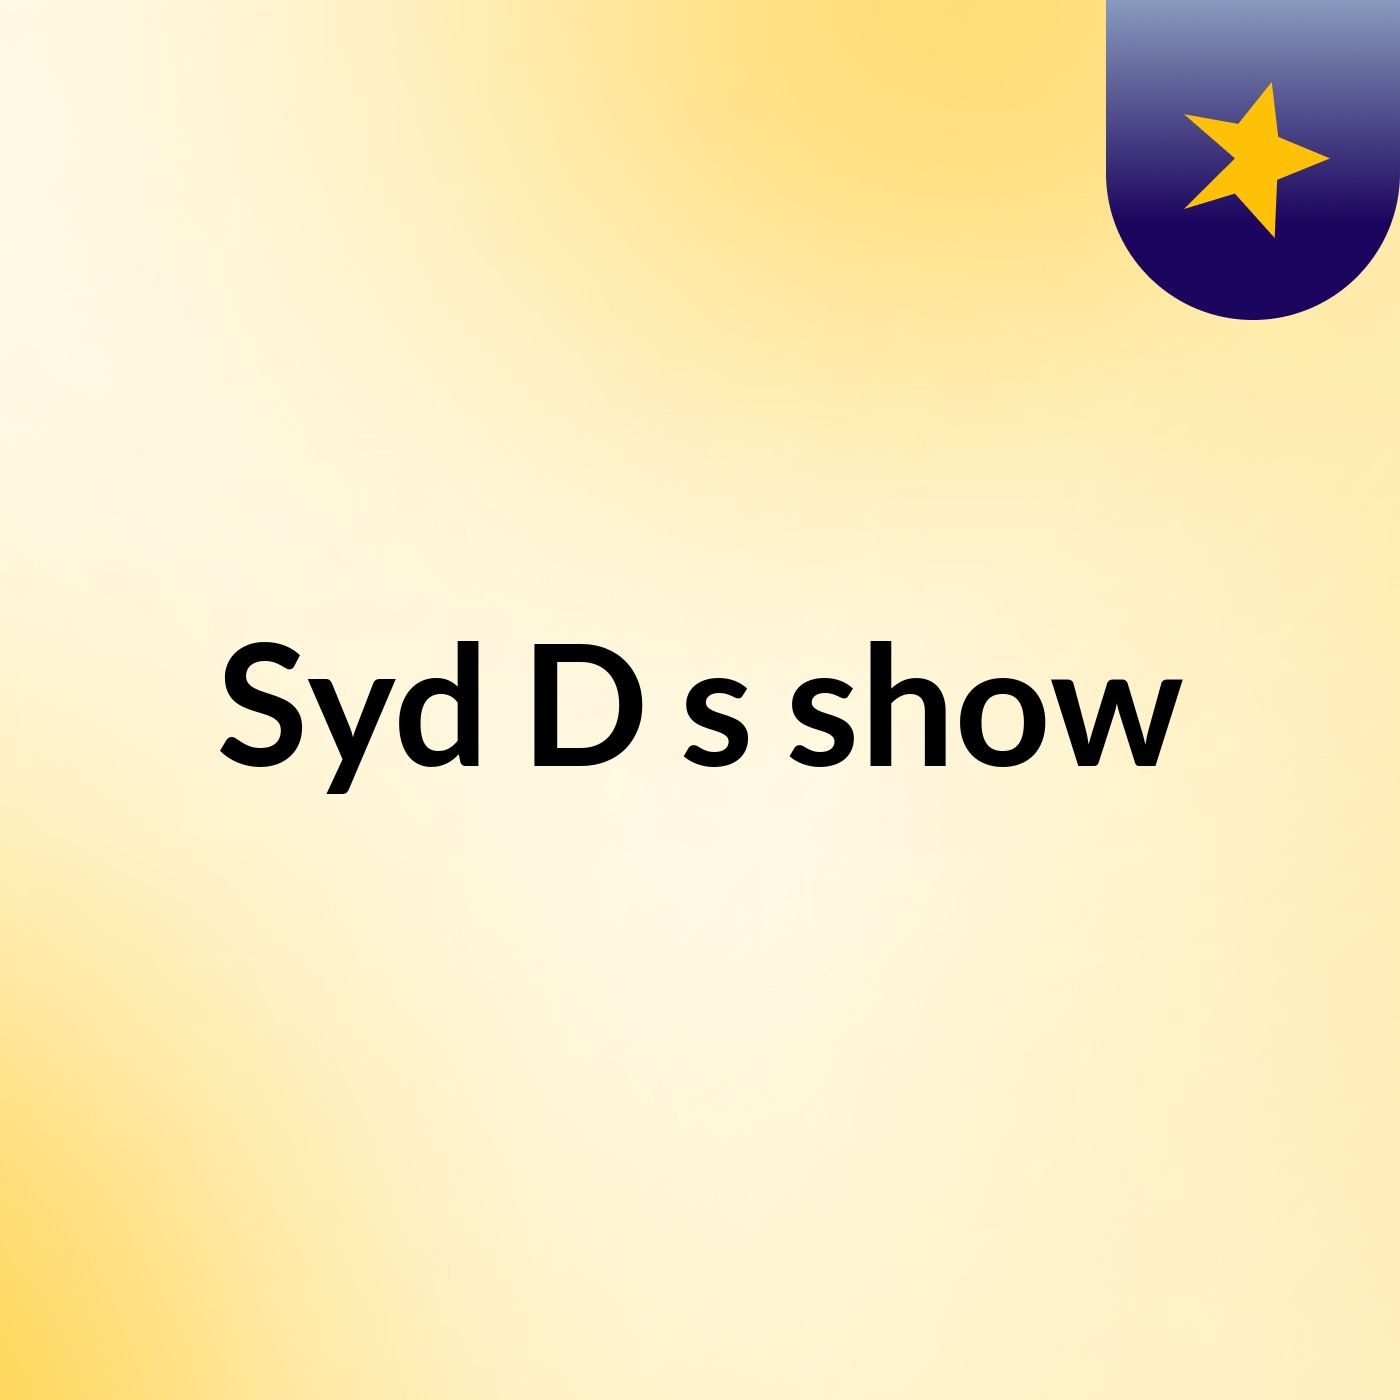 Syd D's show